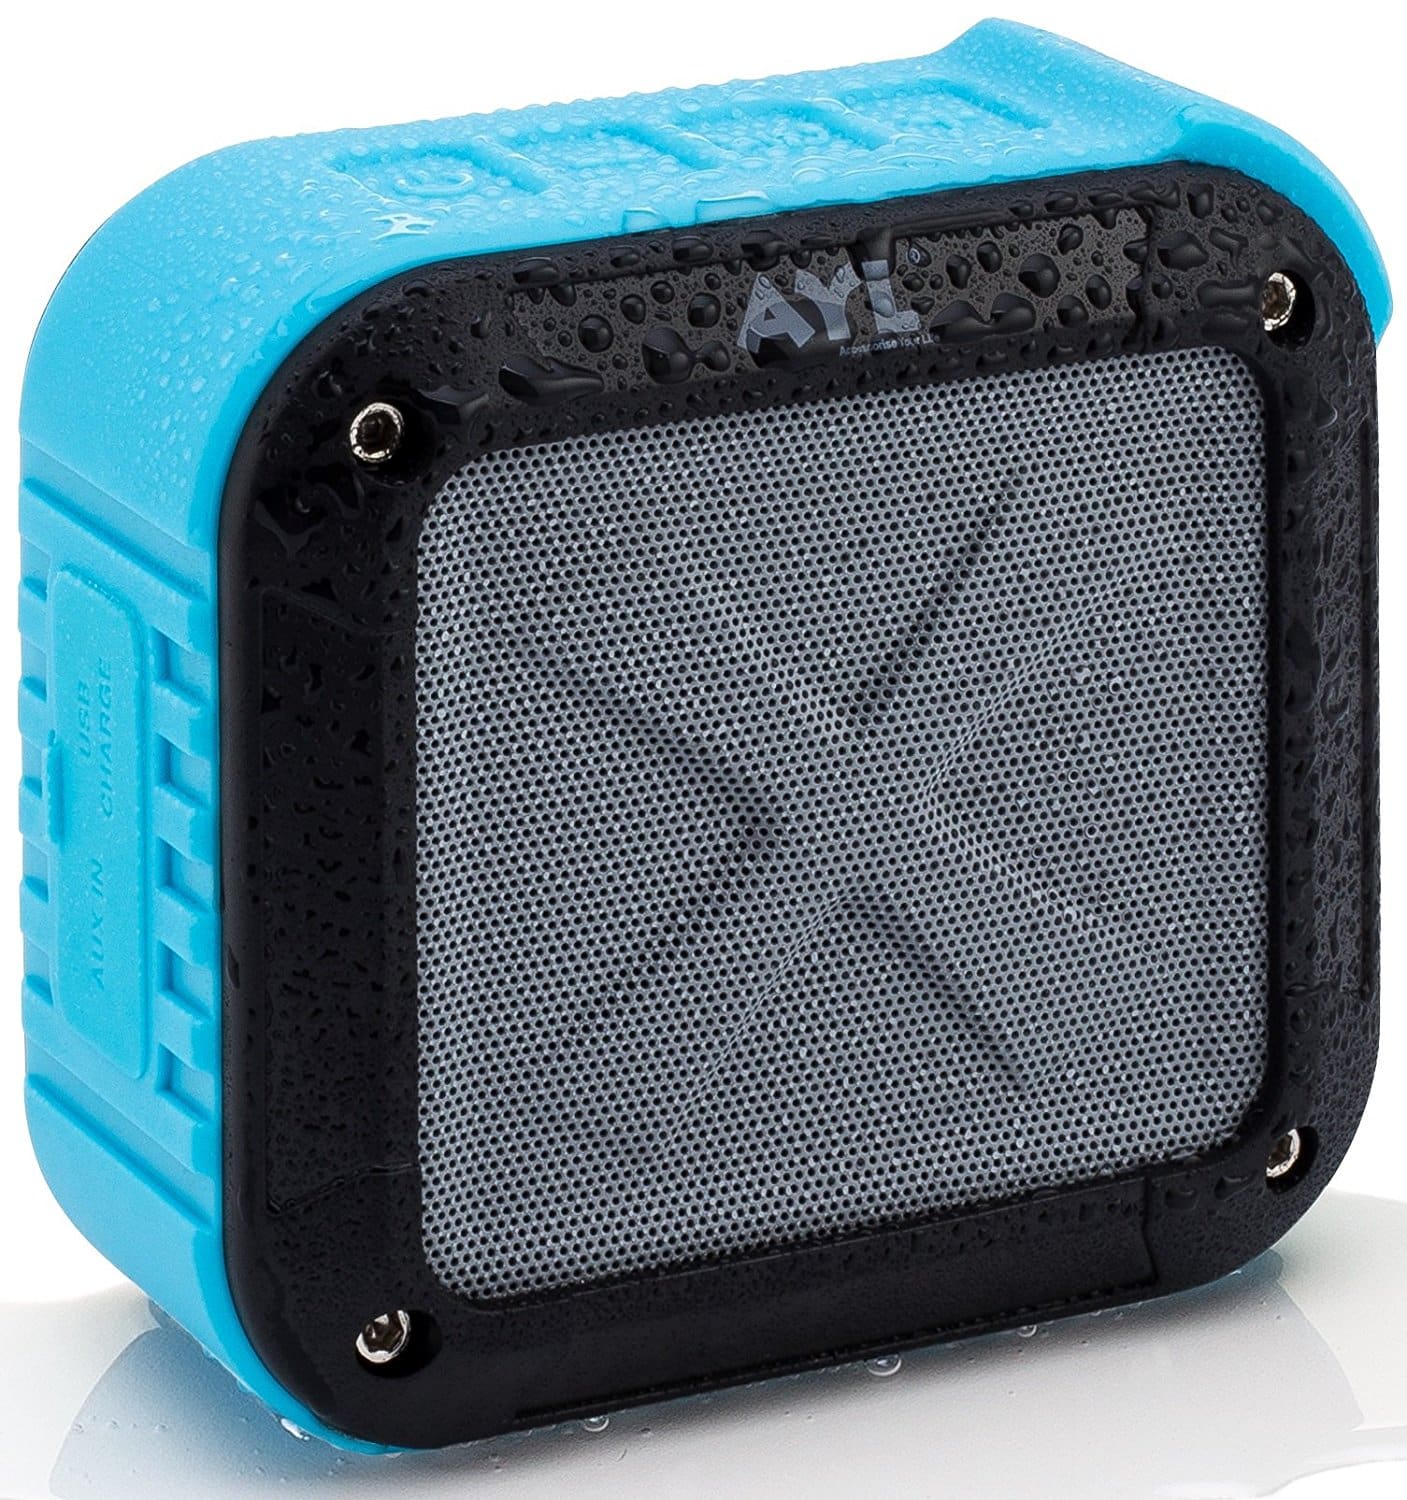 LIGHTNING DEAL ALERT! Shower Bluetooth Speaker 25% off!